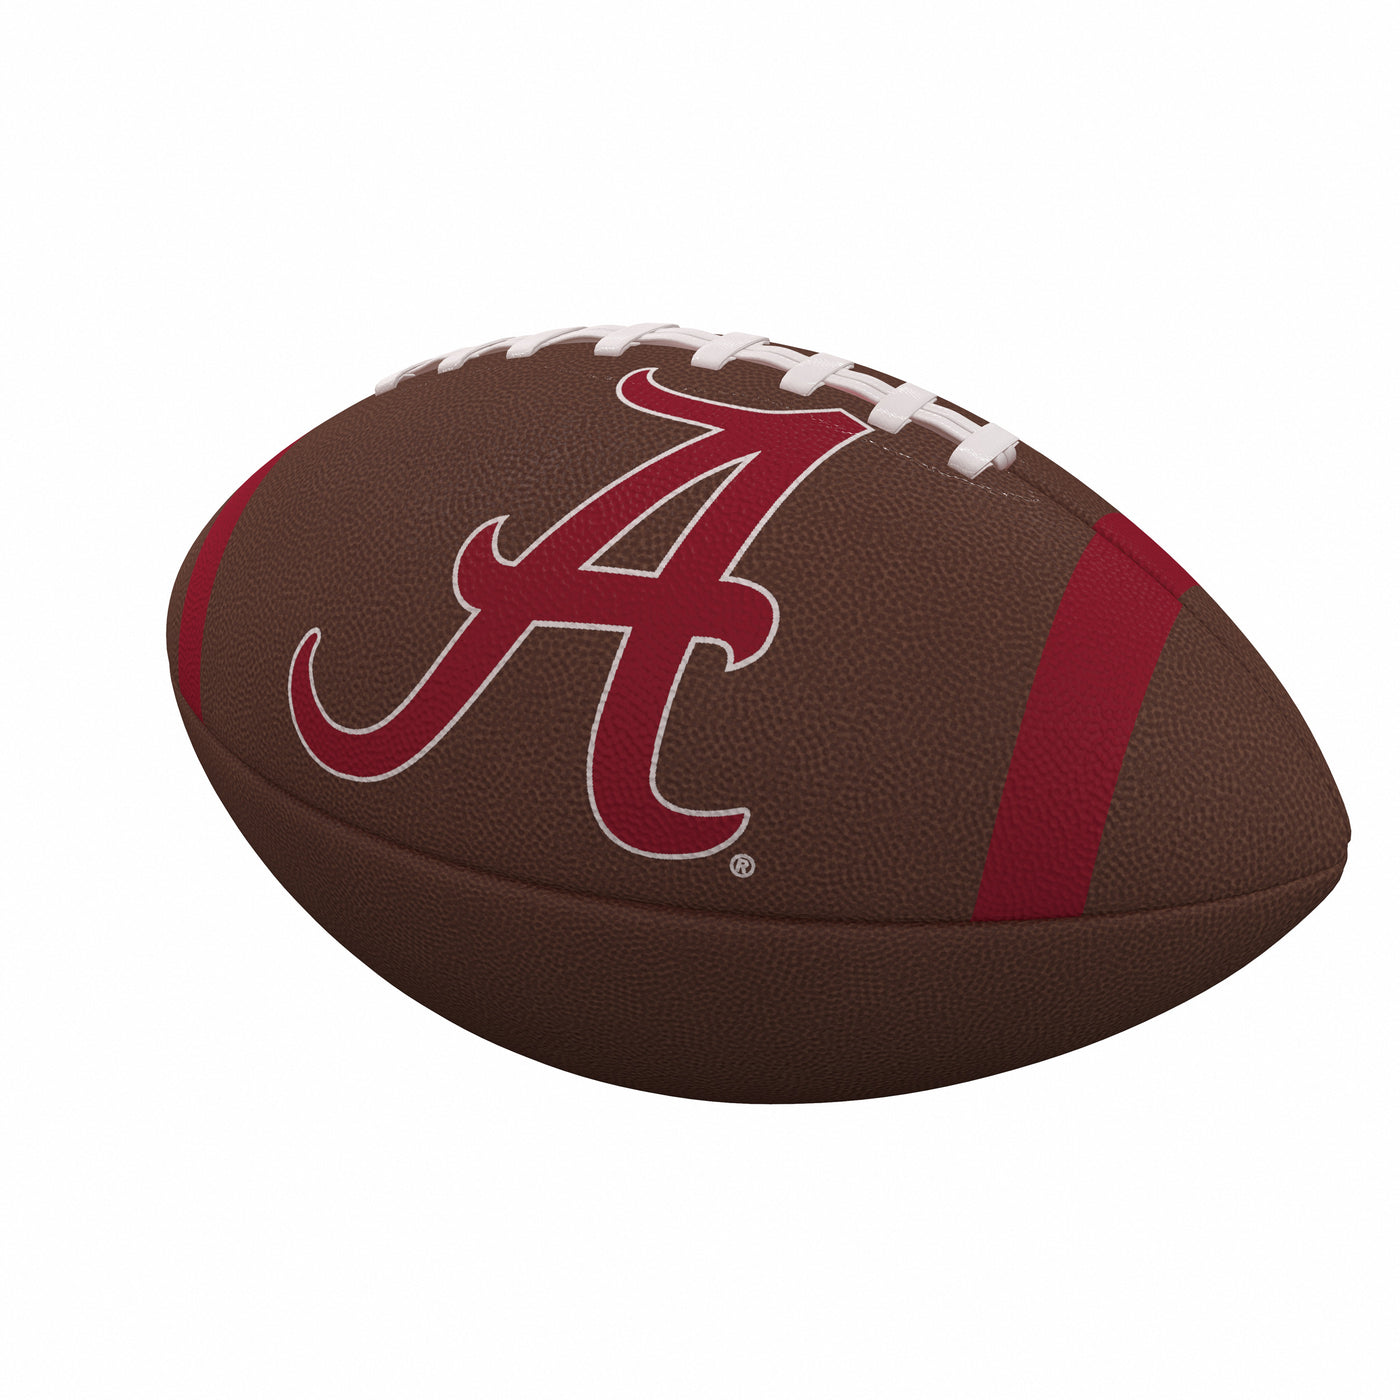 Alabama Team Stripe Official-Size Composite Football